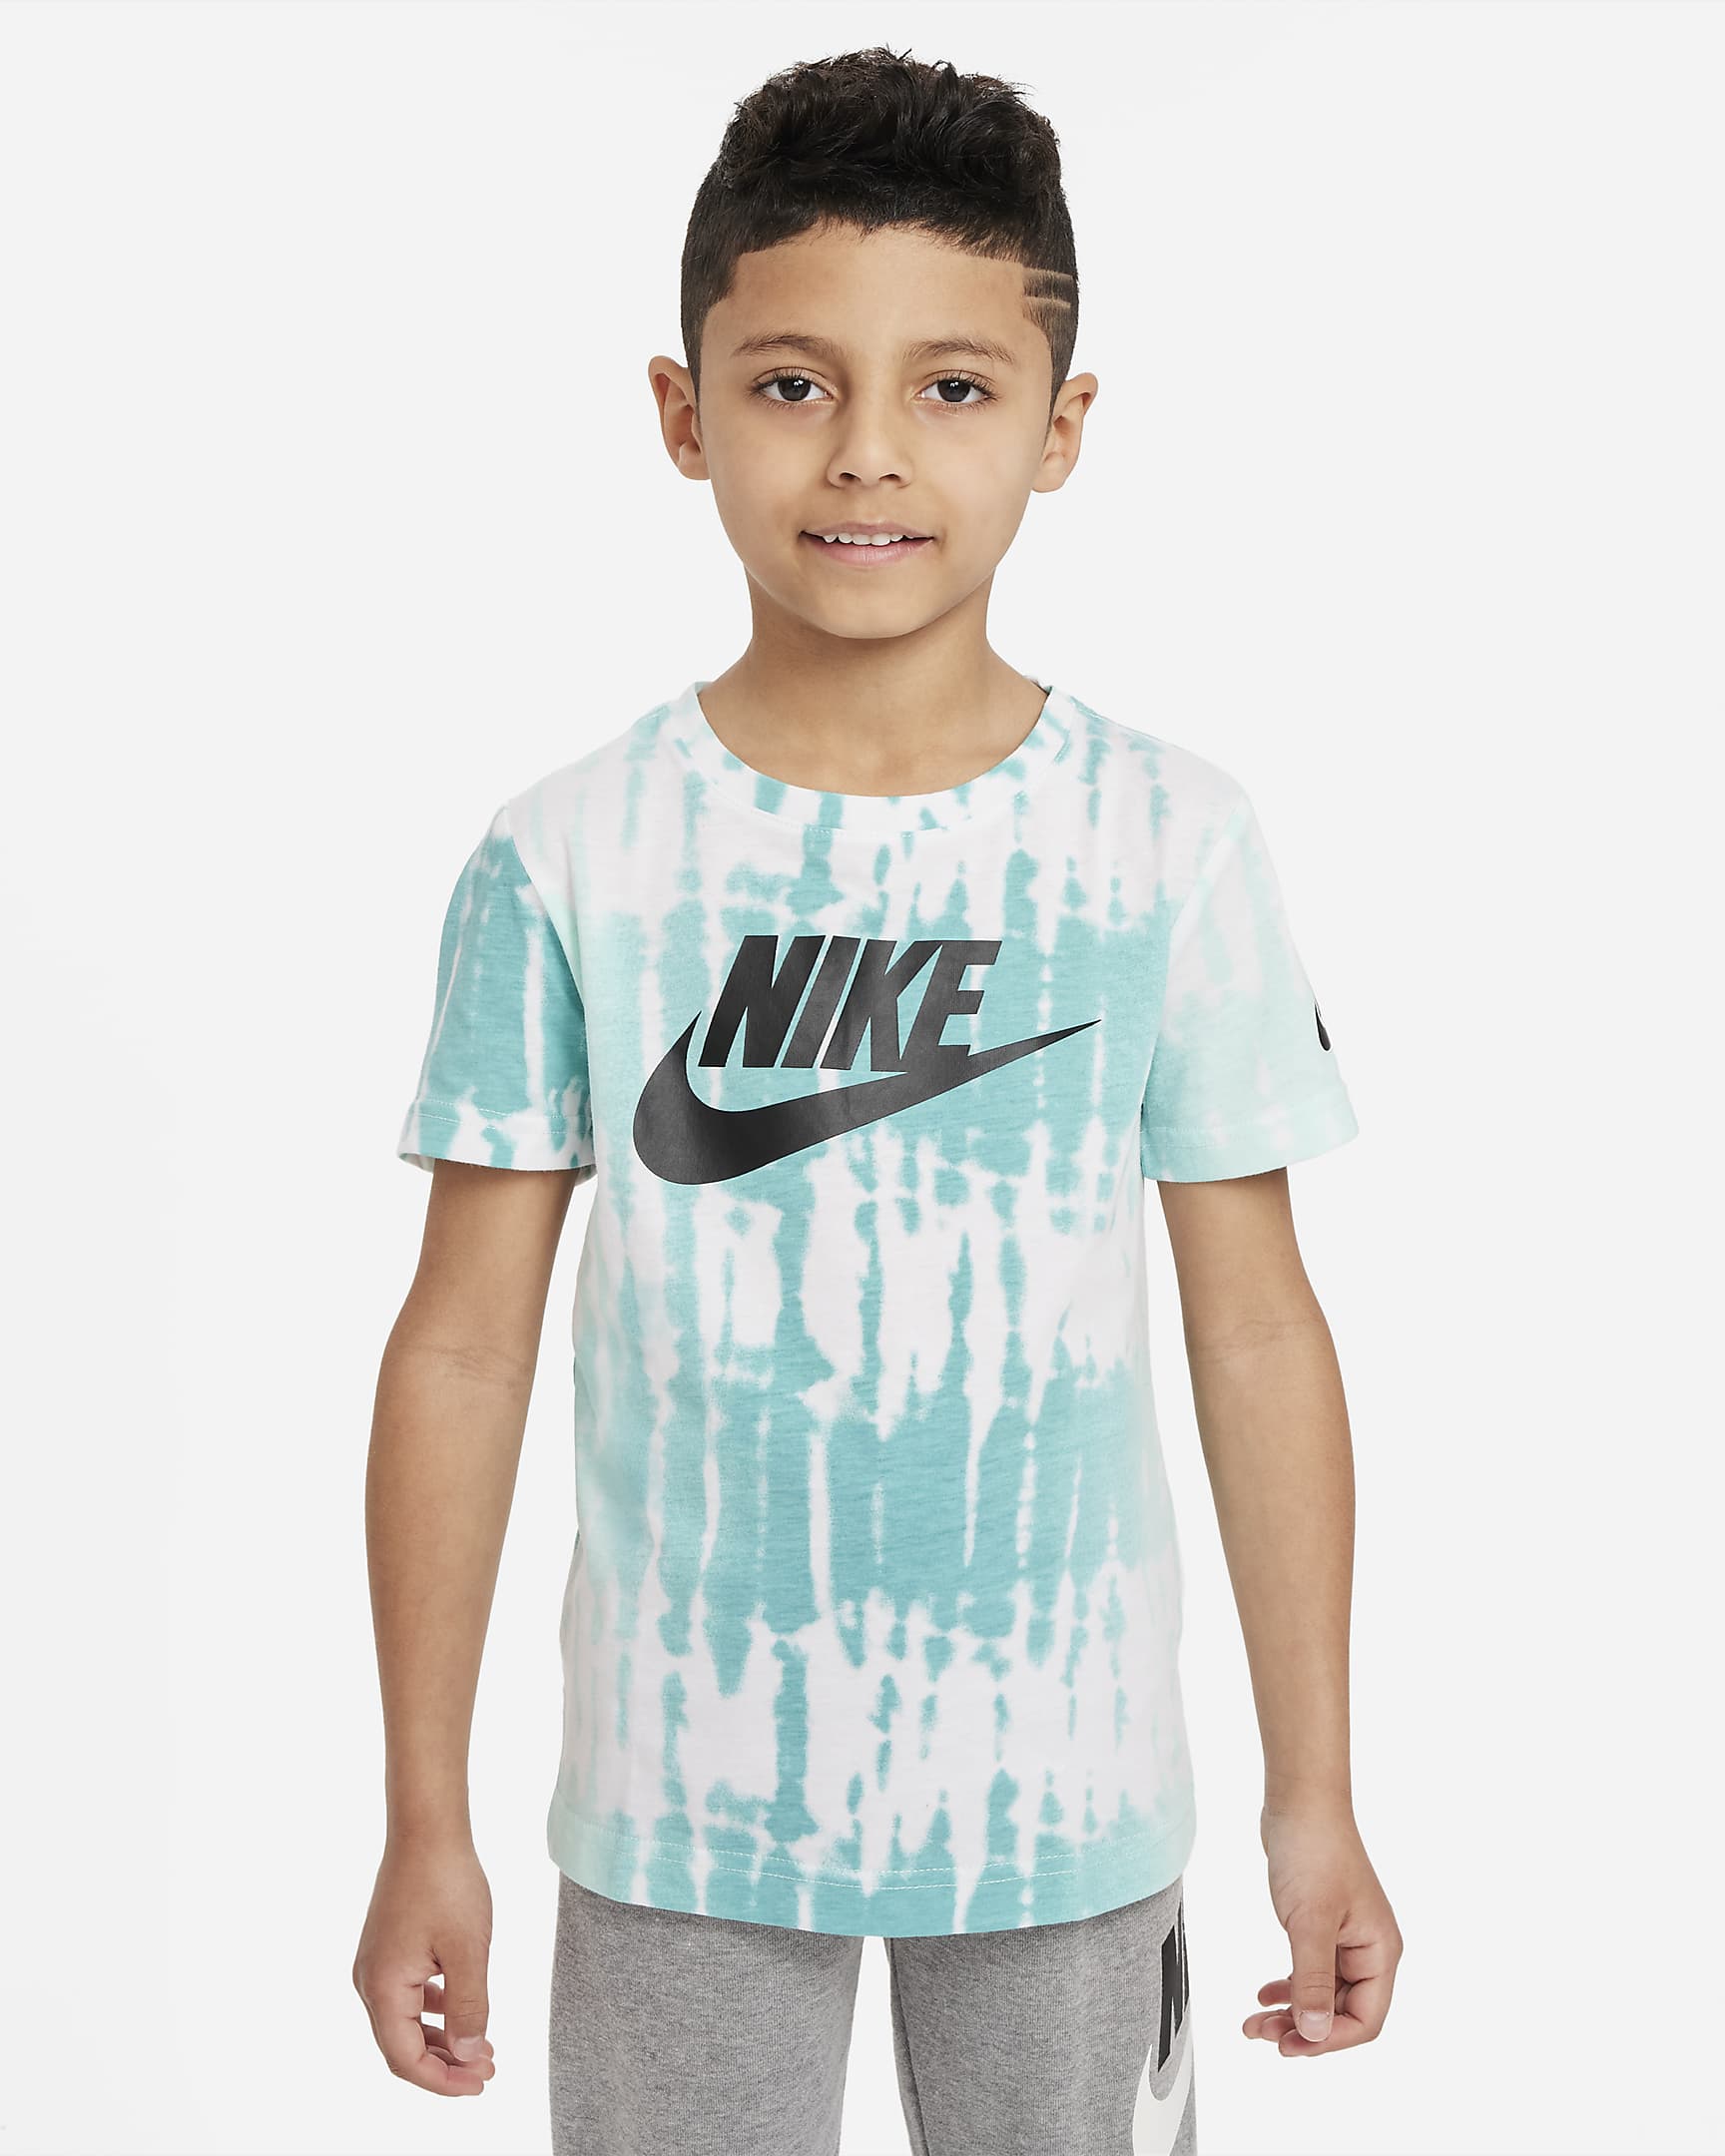 Nike Little Kids\' T-Shirt Washed Teal